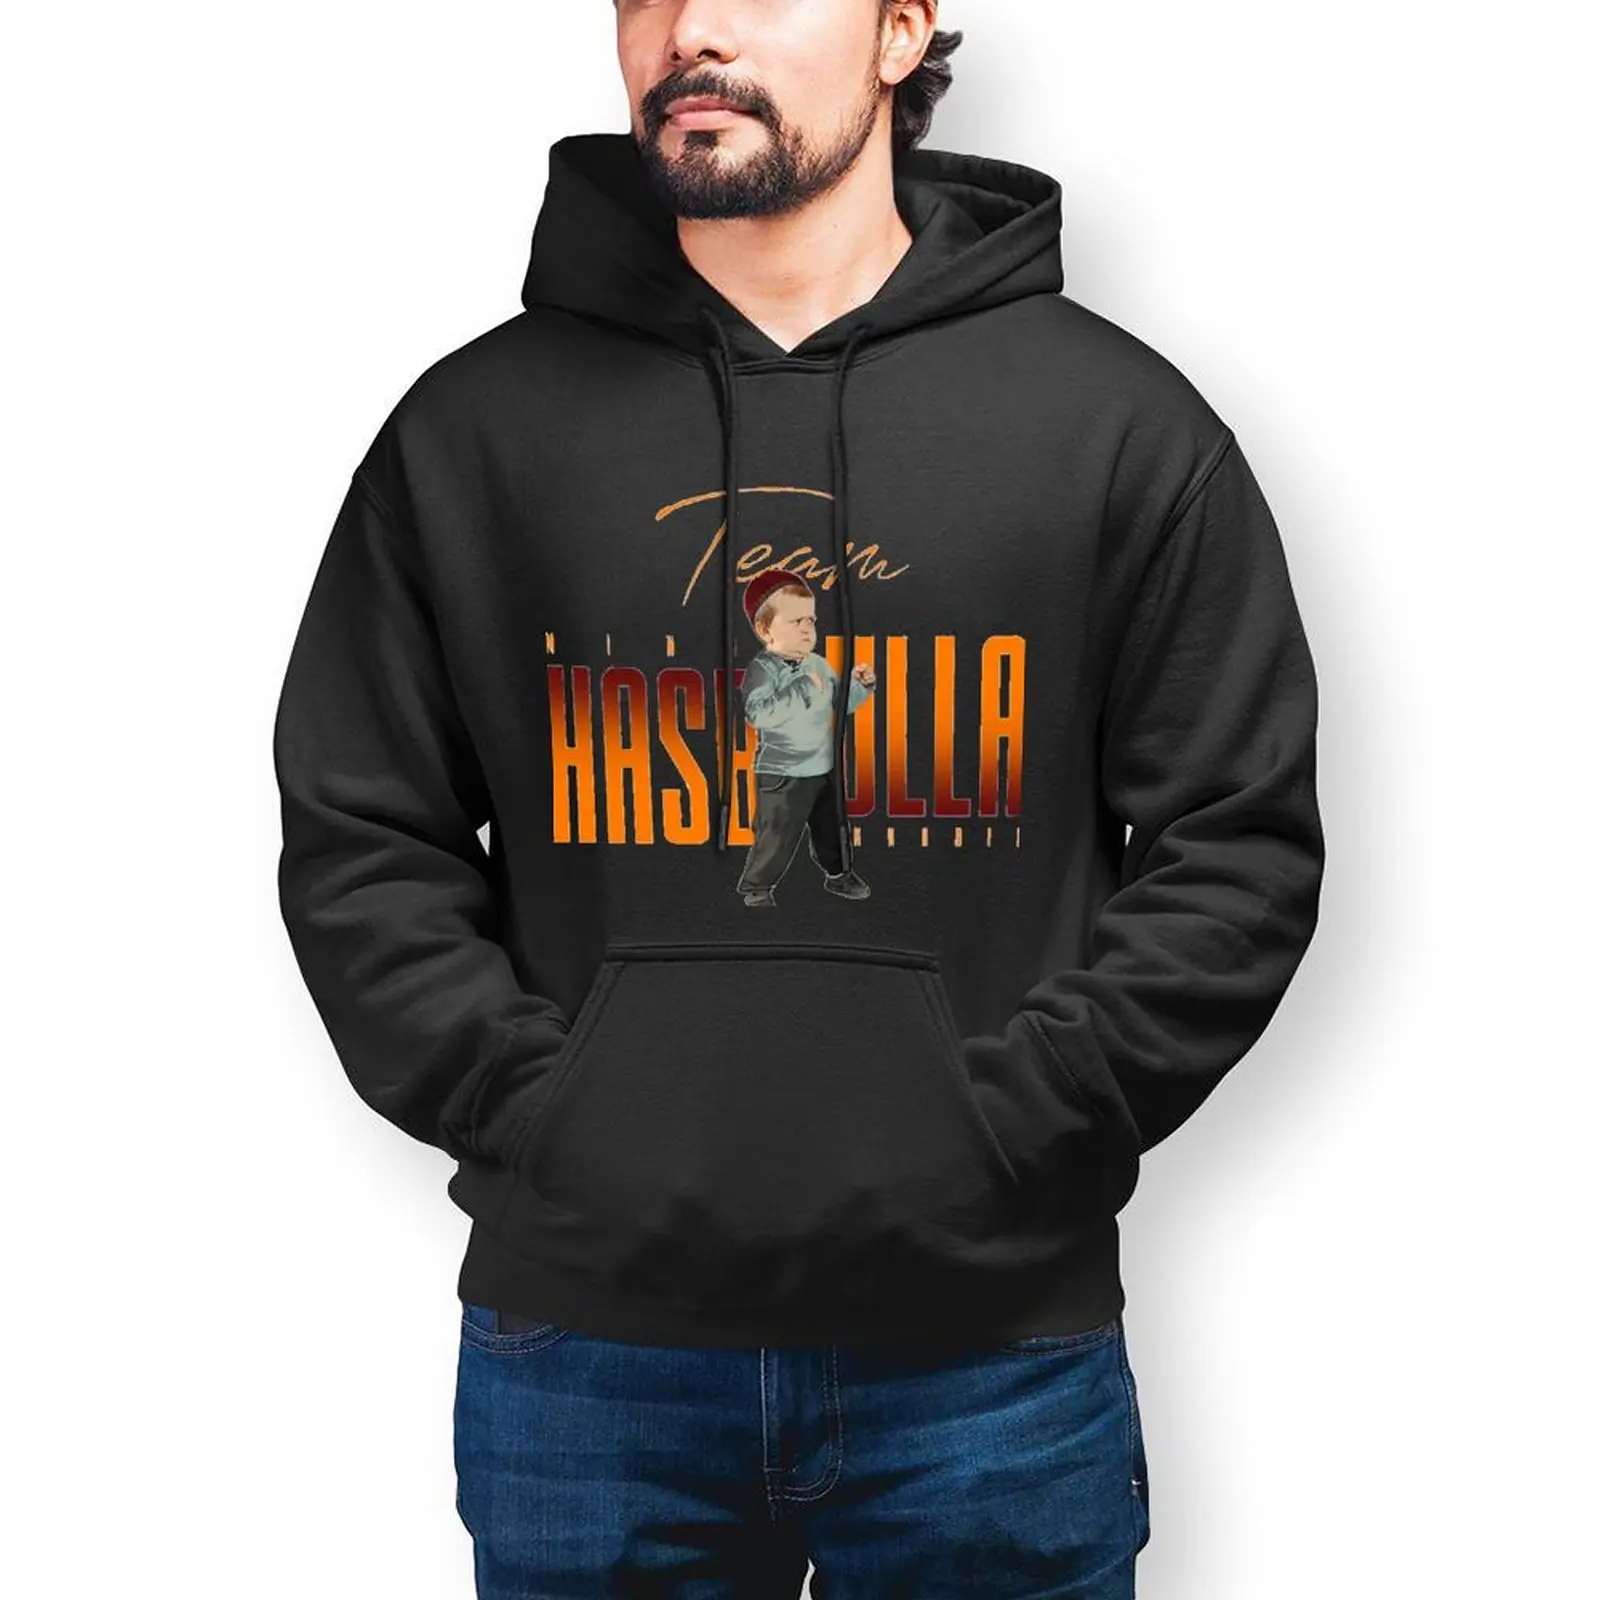 

Hasbulla Essentials Hoodies Autumn Russian Internet Celebrity Fashion Sweatshirts Man Trendy Classic Oversize Pullover Hoodie